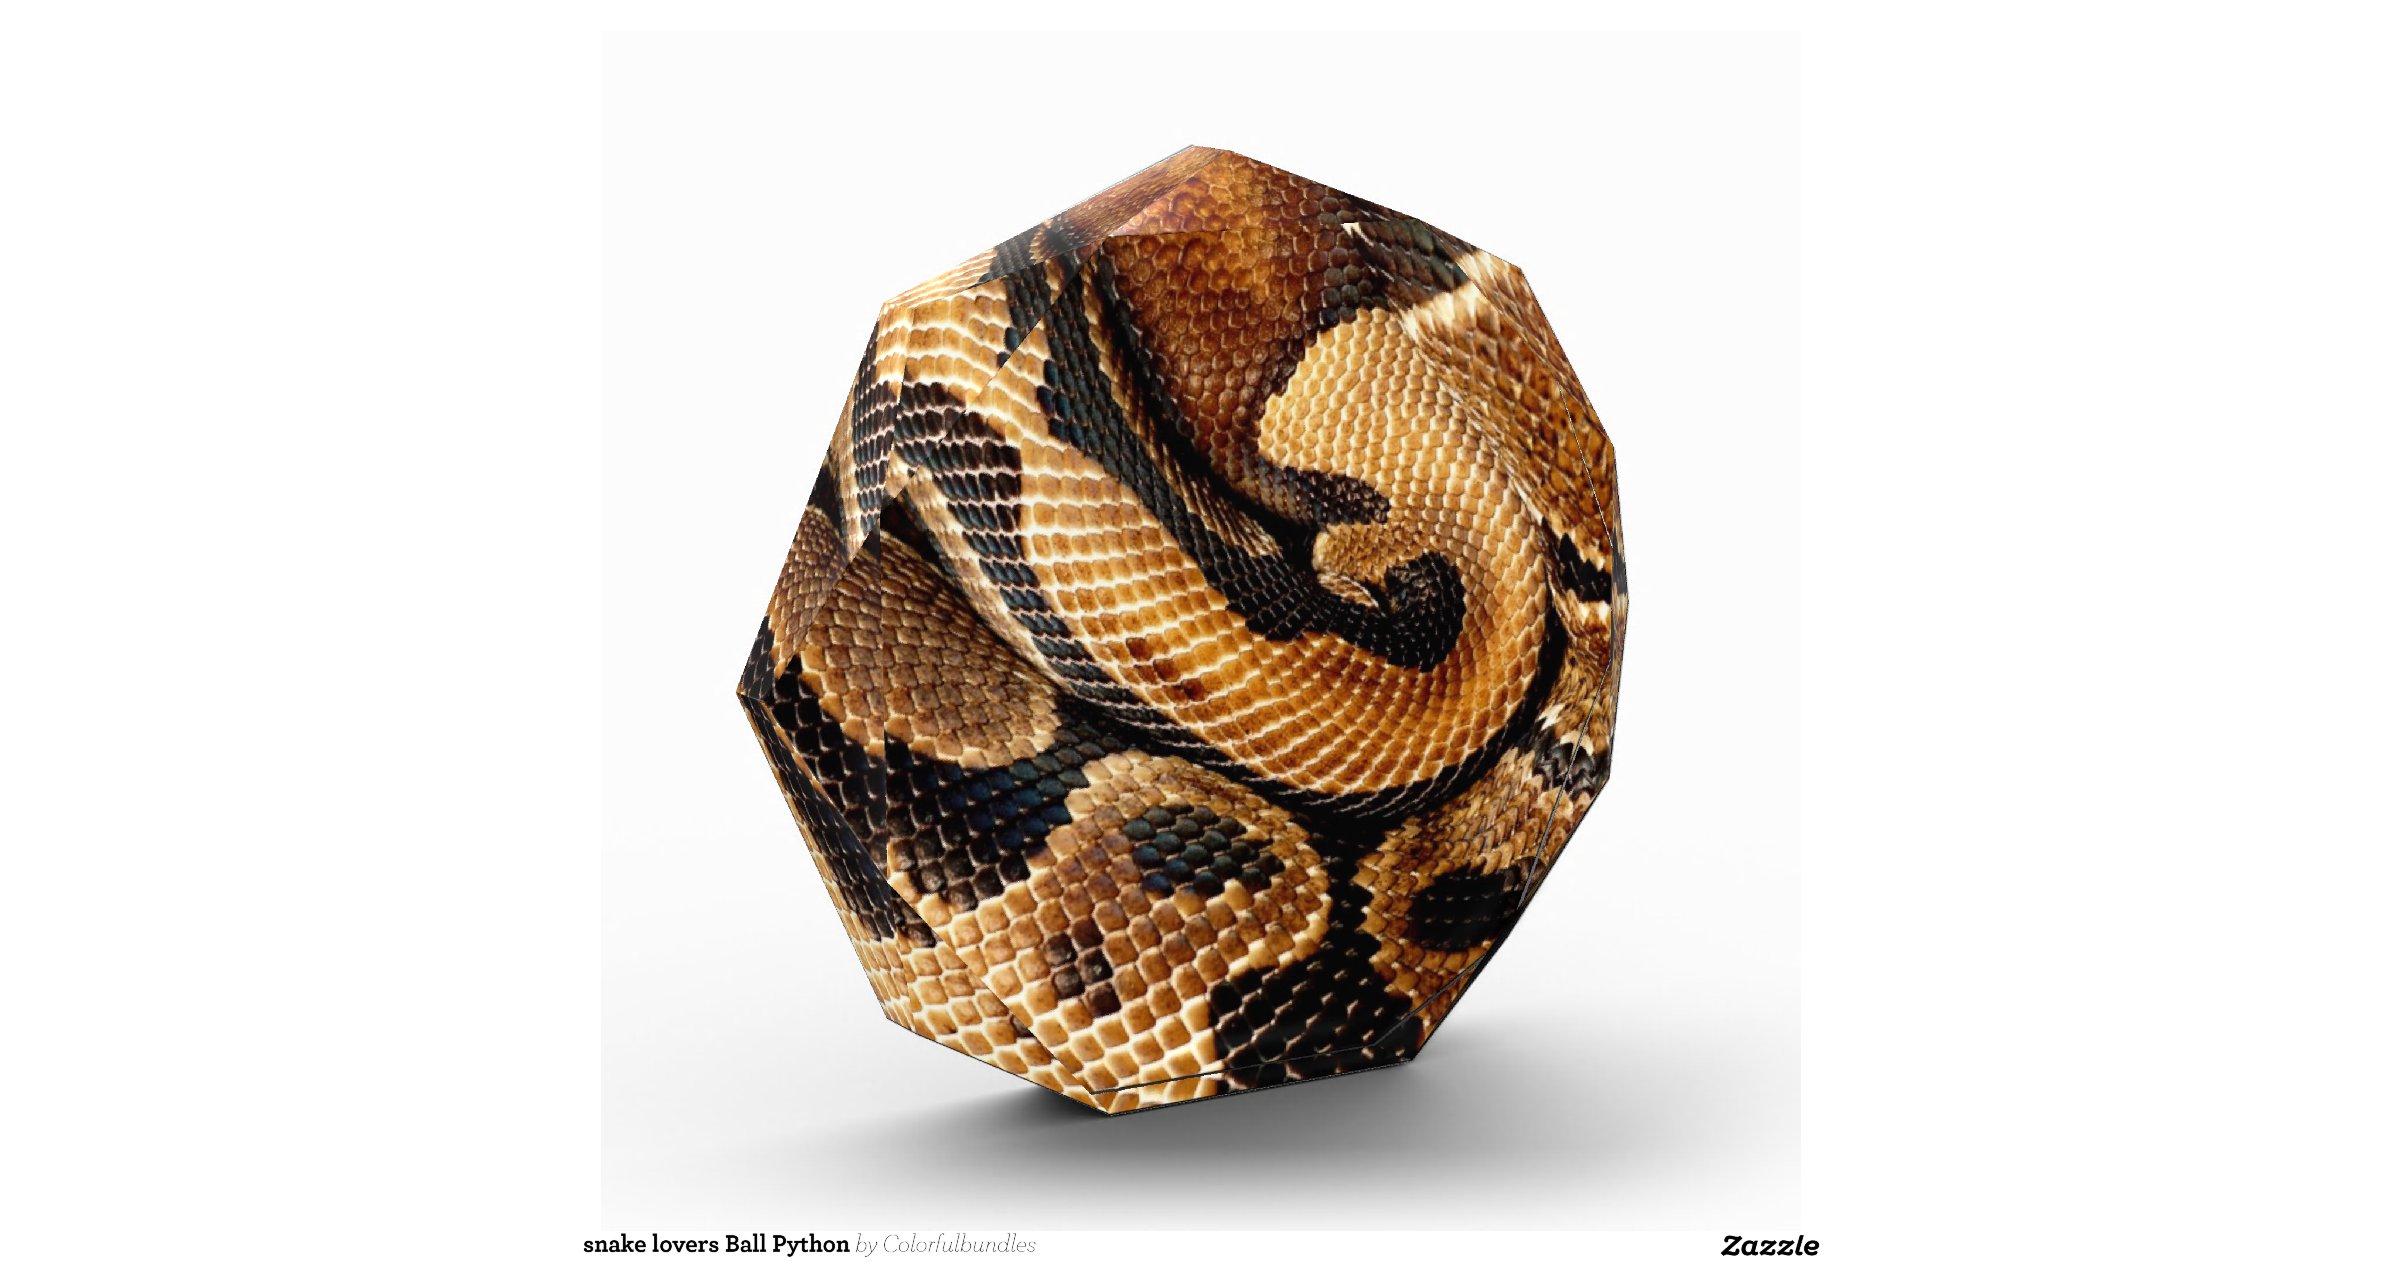 snake lovers Ball Python Award | Zazzle